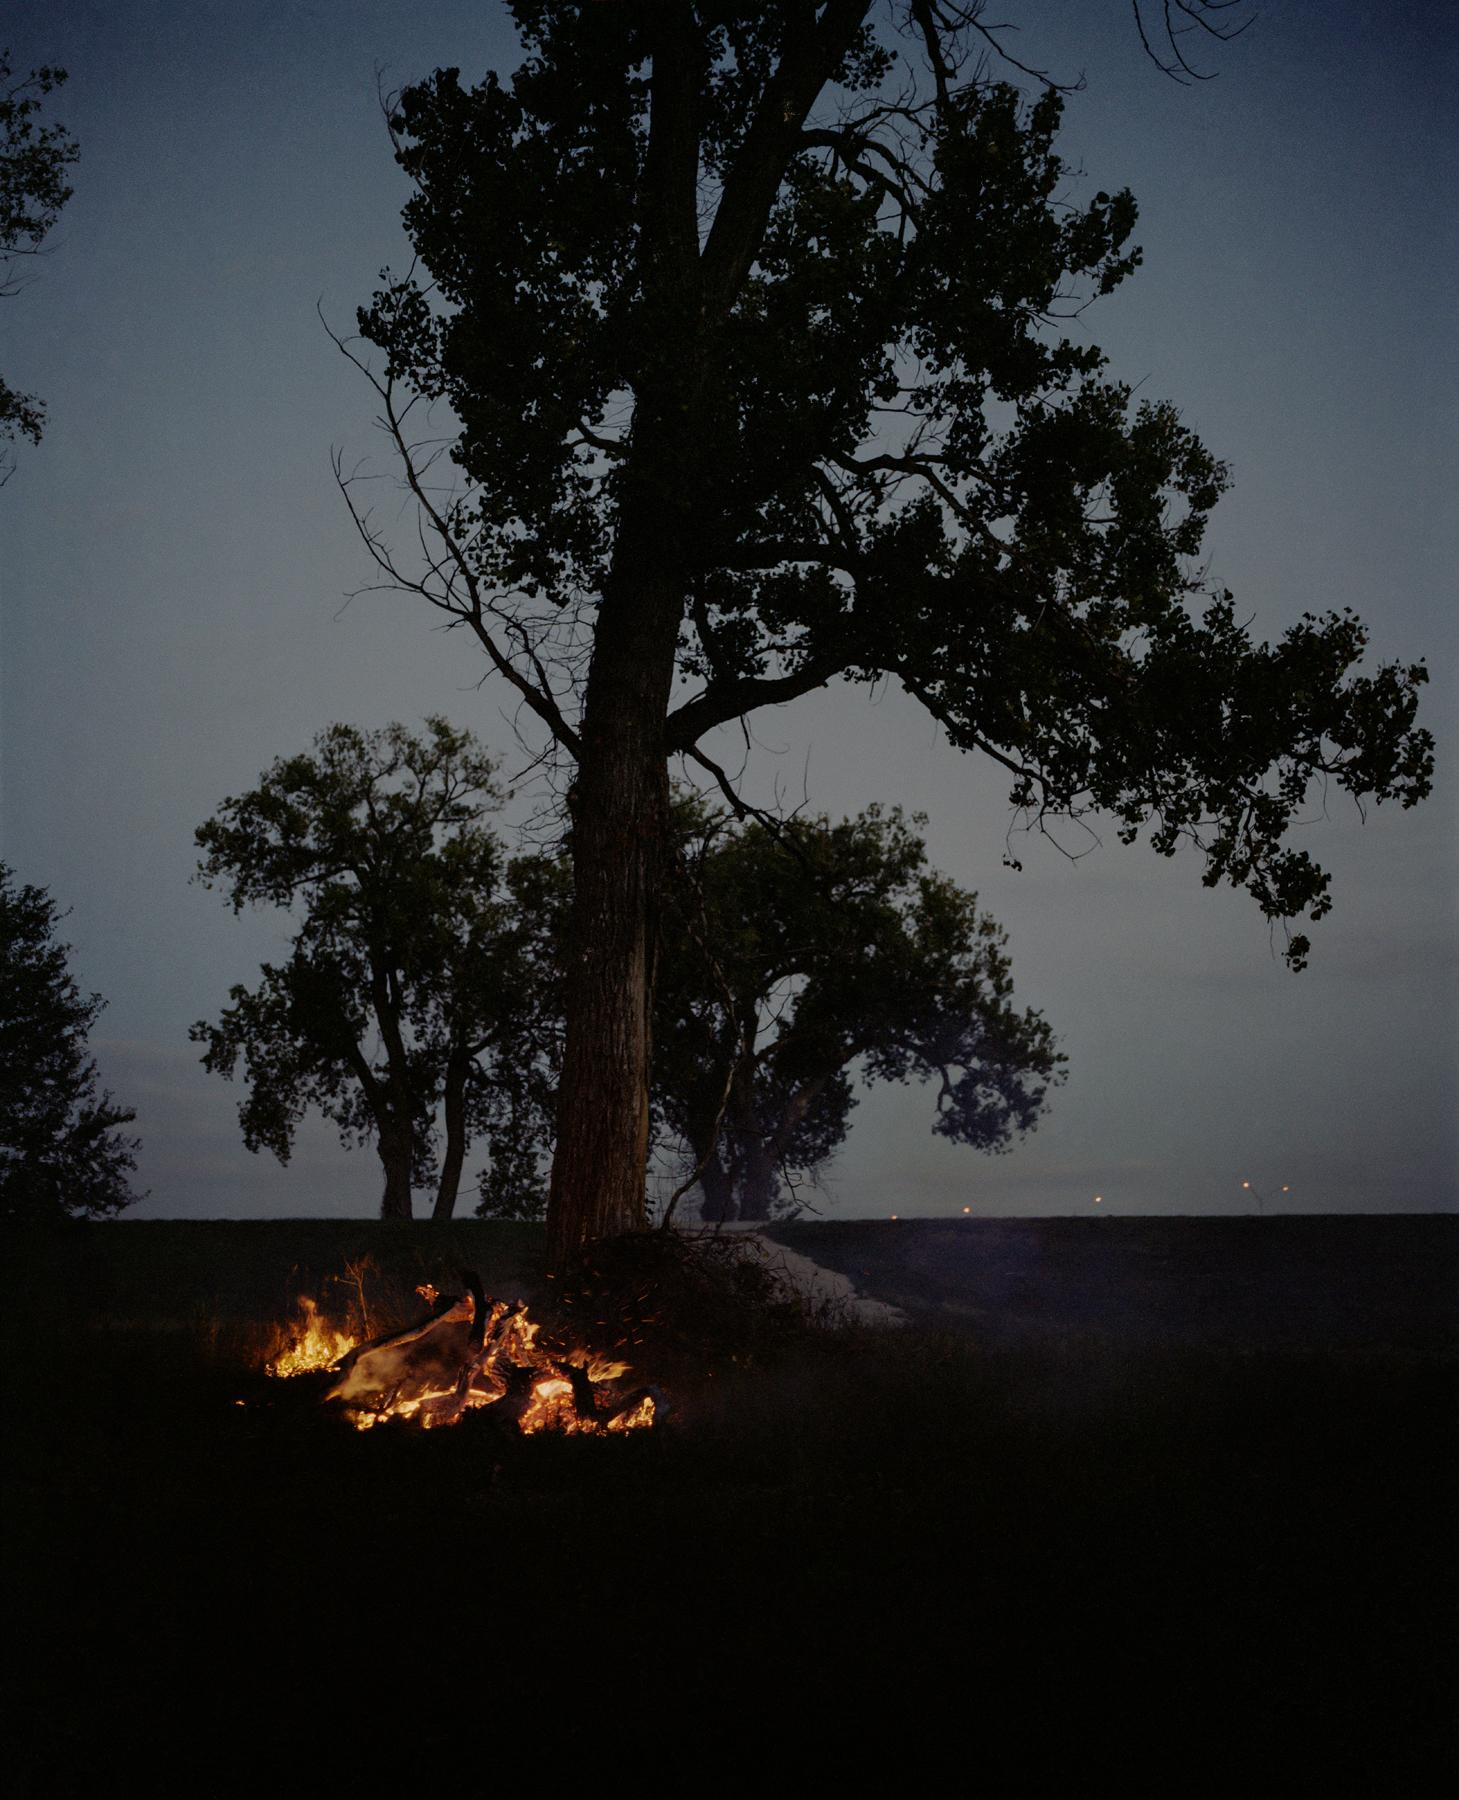 Omaha Sketchbook: Fire and Tree, Omaha, NE - Contemporary Photography